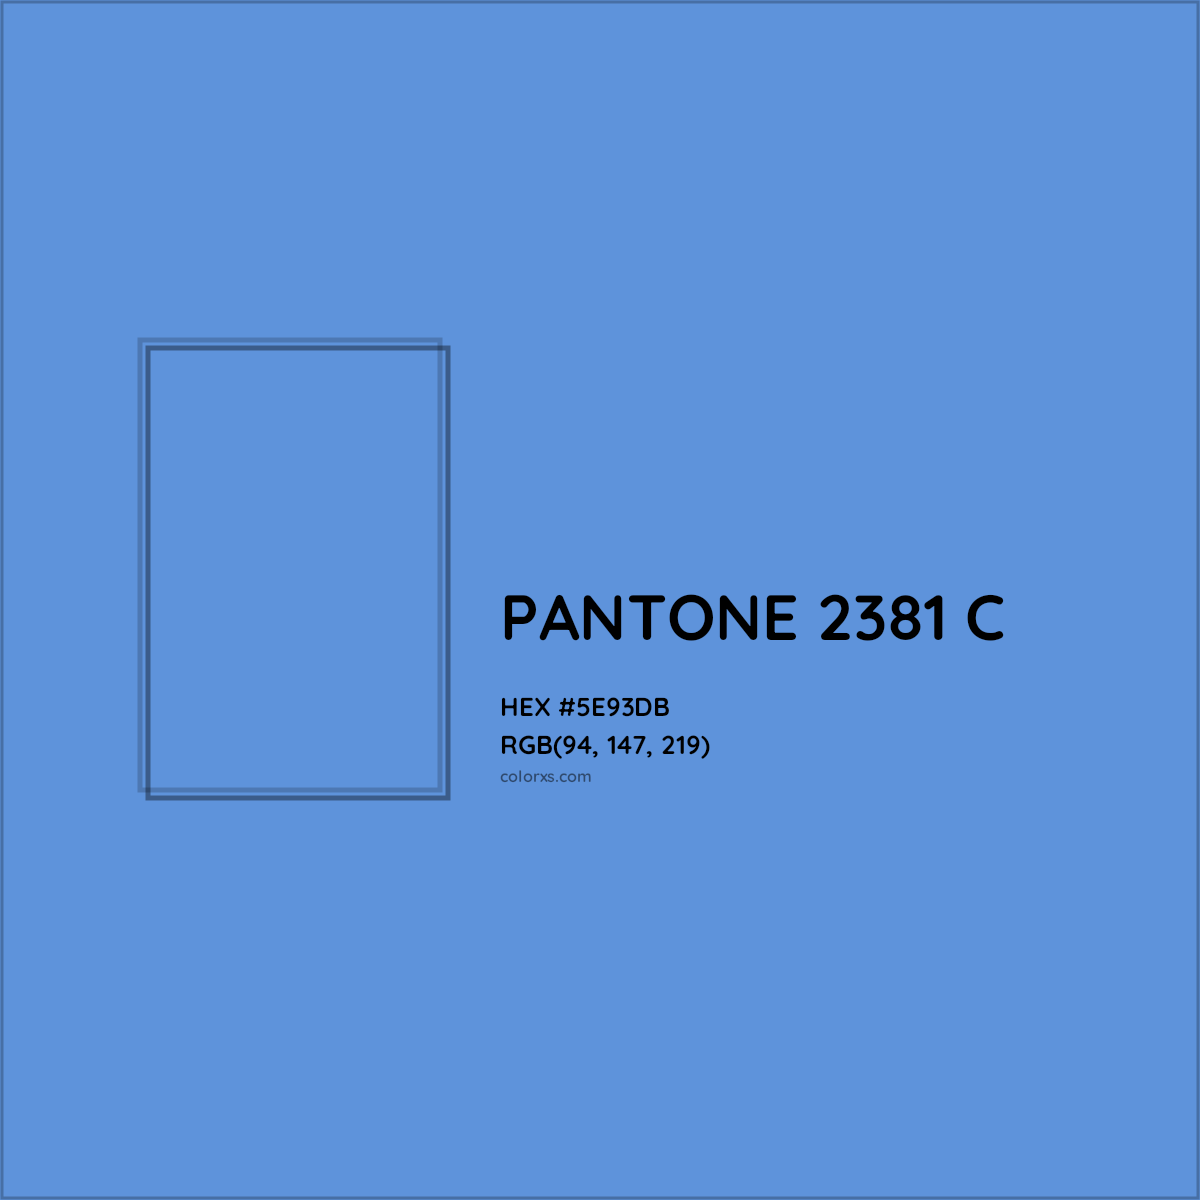 HEX #5E93DB PANTONE 2381 C CMS Pantone PMS - Color Code